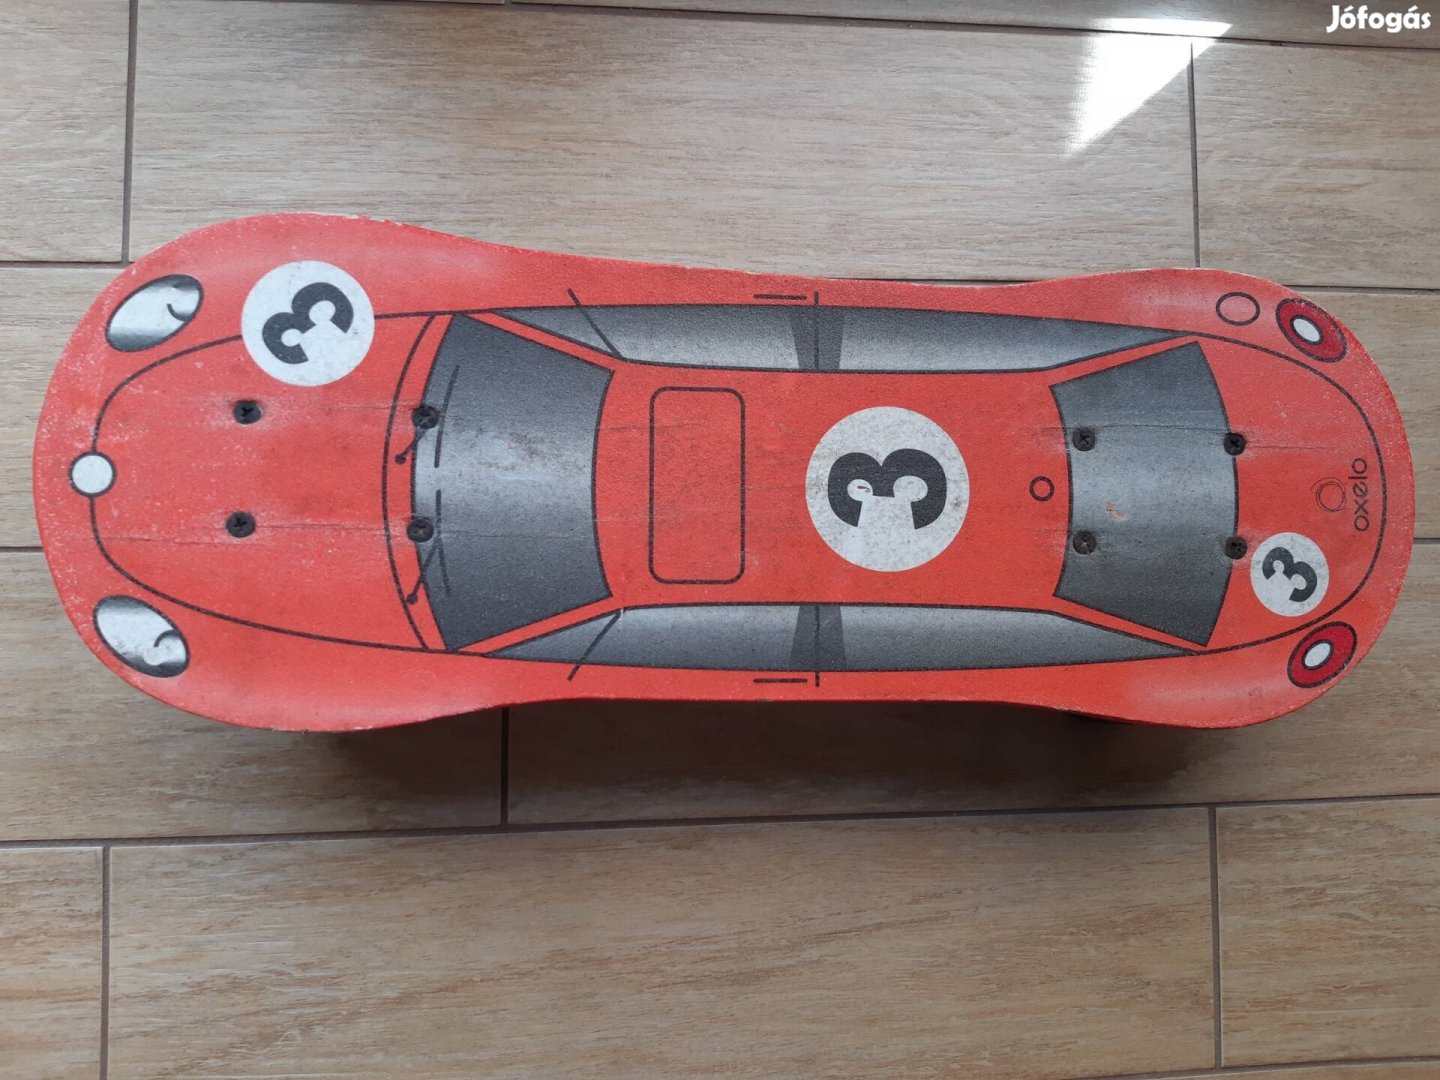 Oxelo skate board Play1 Red Racer